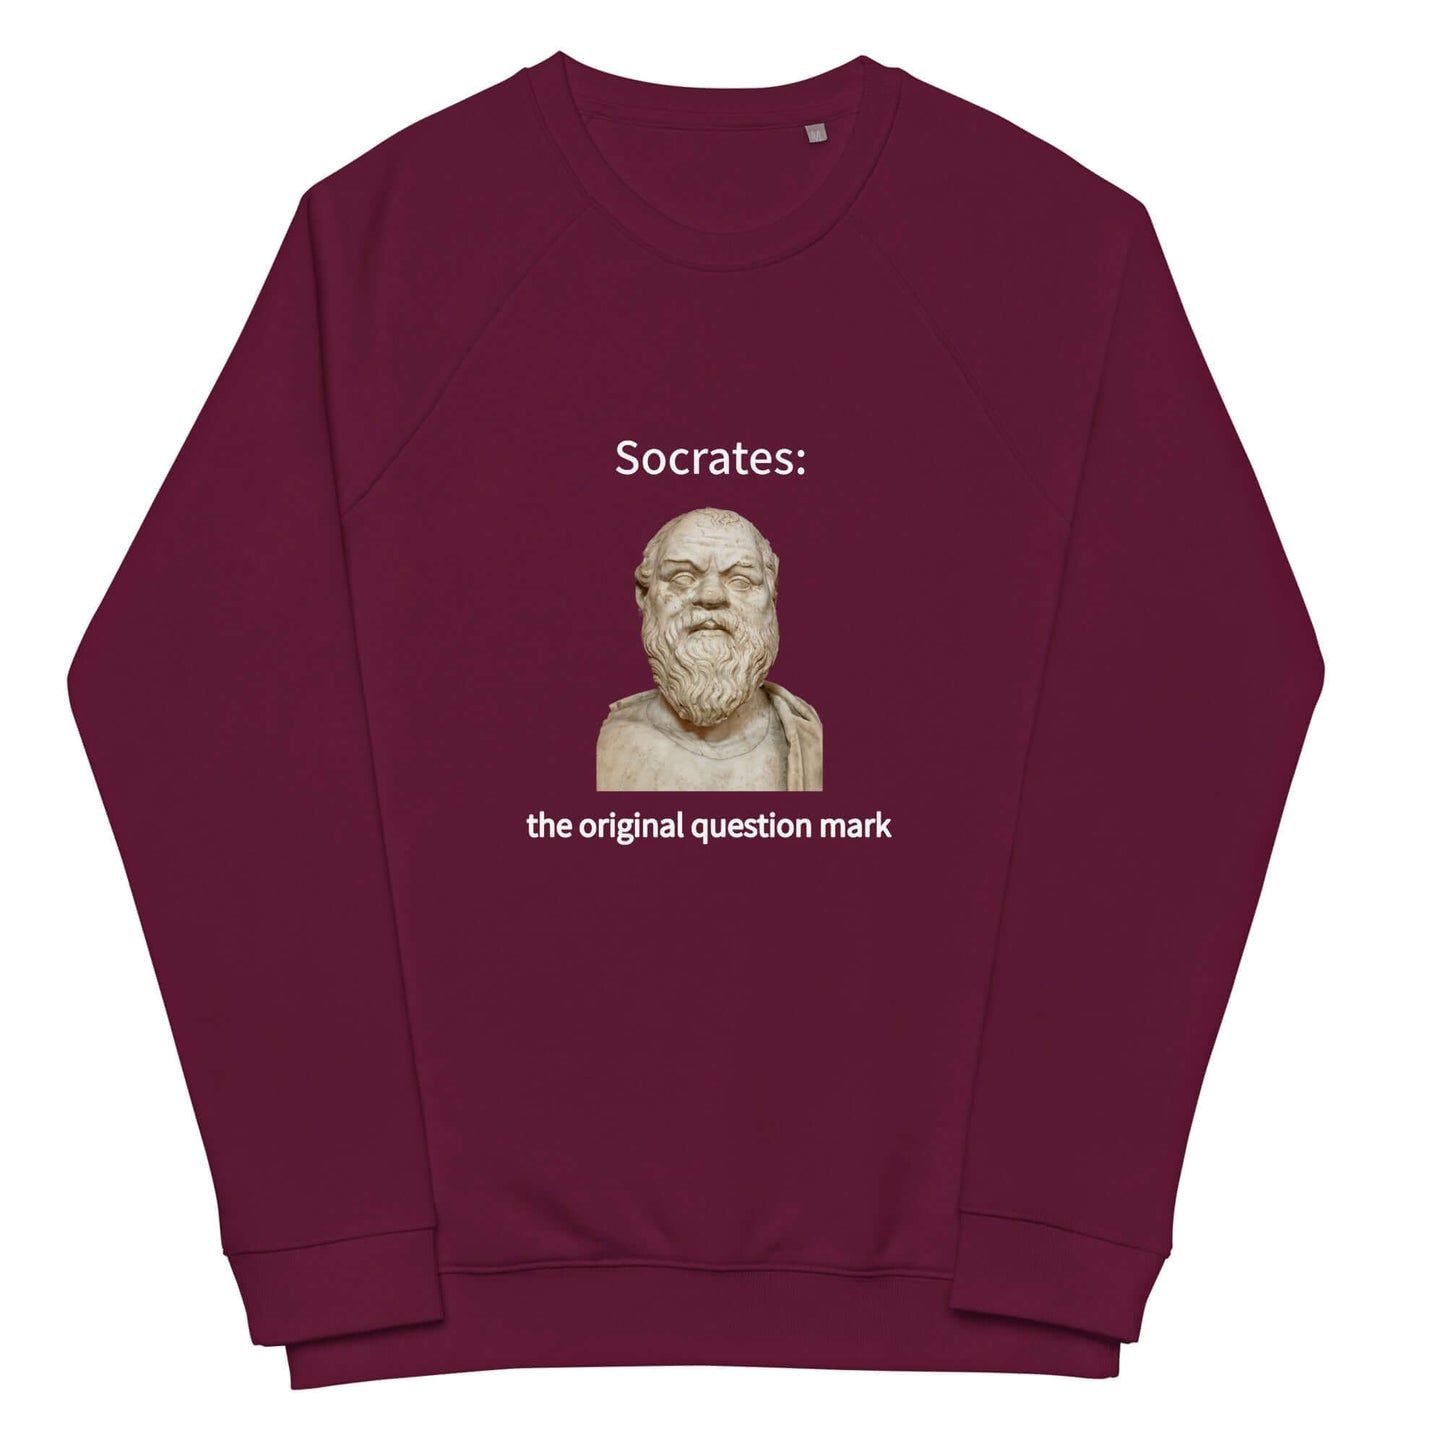 Socrates: the original question mark - Unisex organic raglan sweatshirt